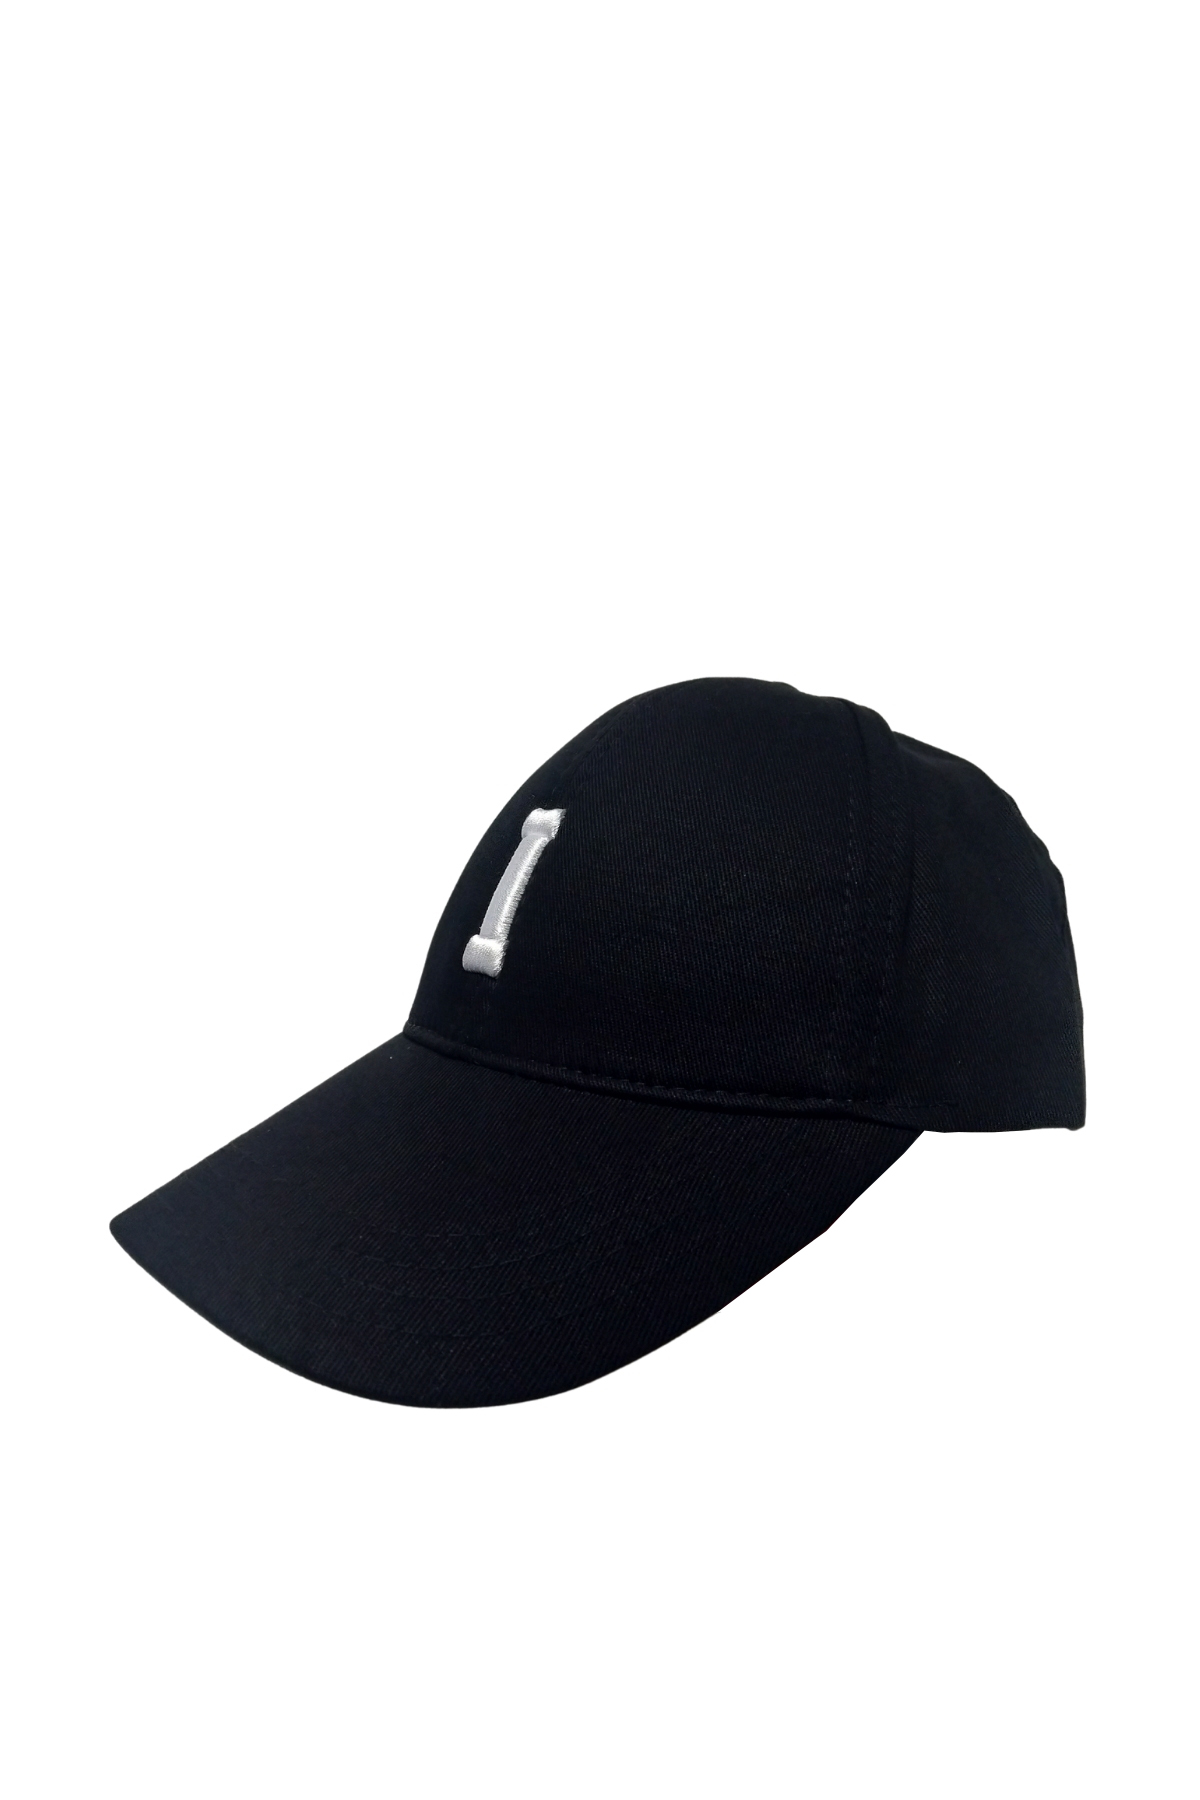 Syt 220 - I Harfli Siyah Şapka